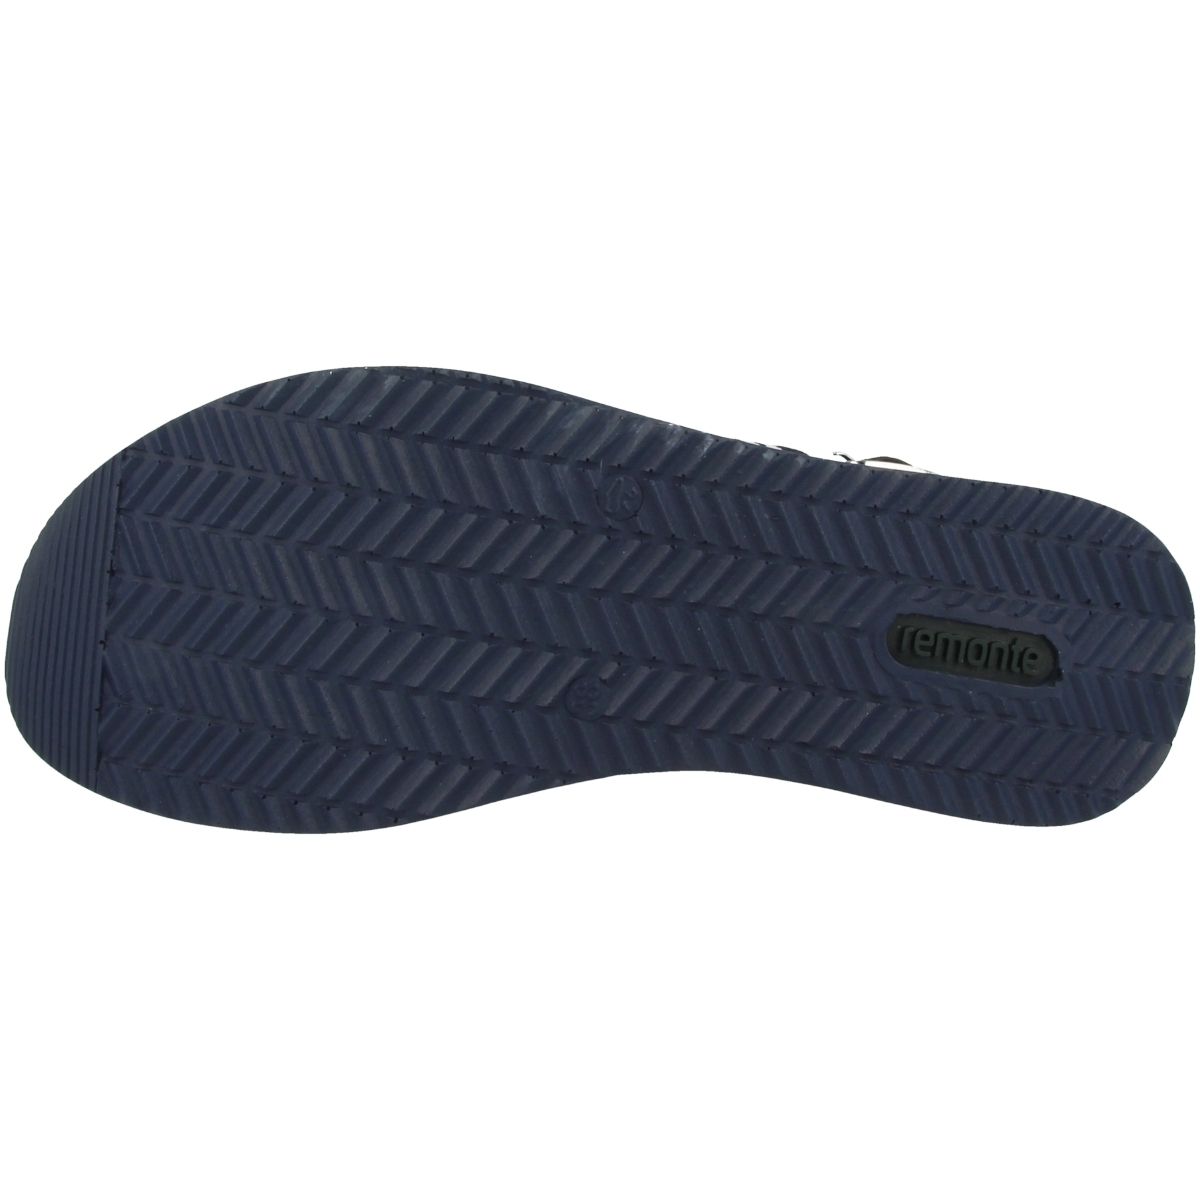 Remonte R2950 Sandale blau